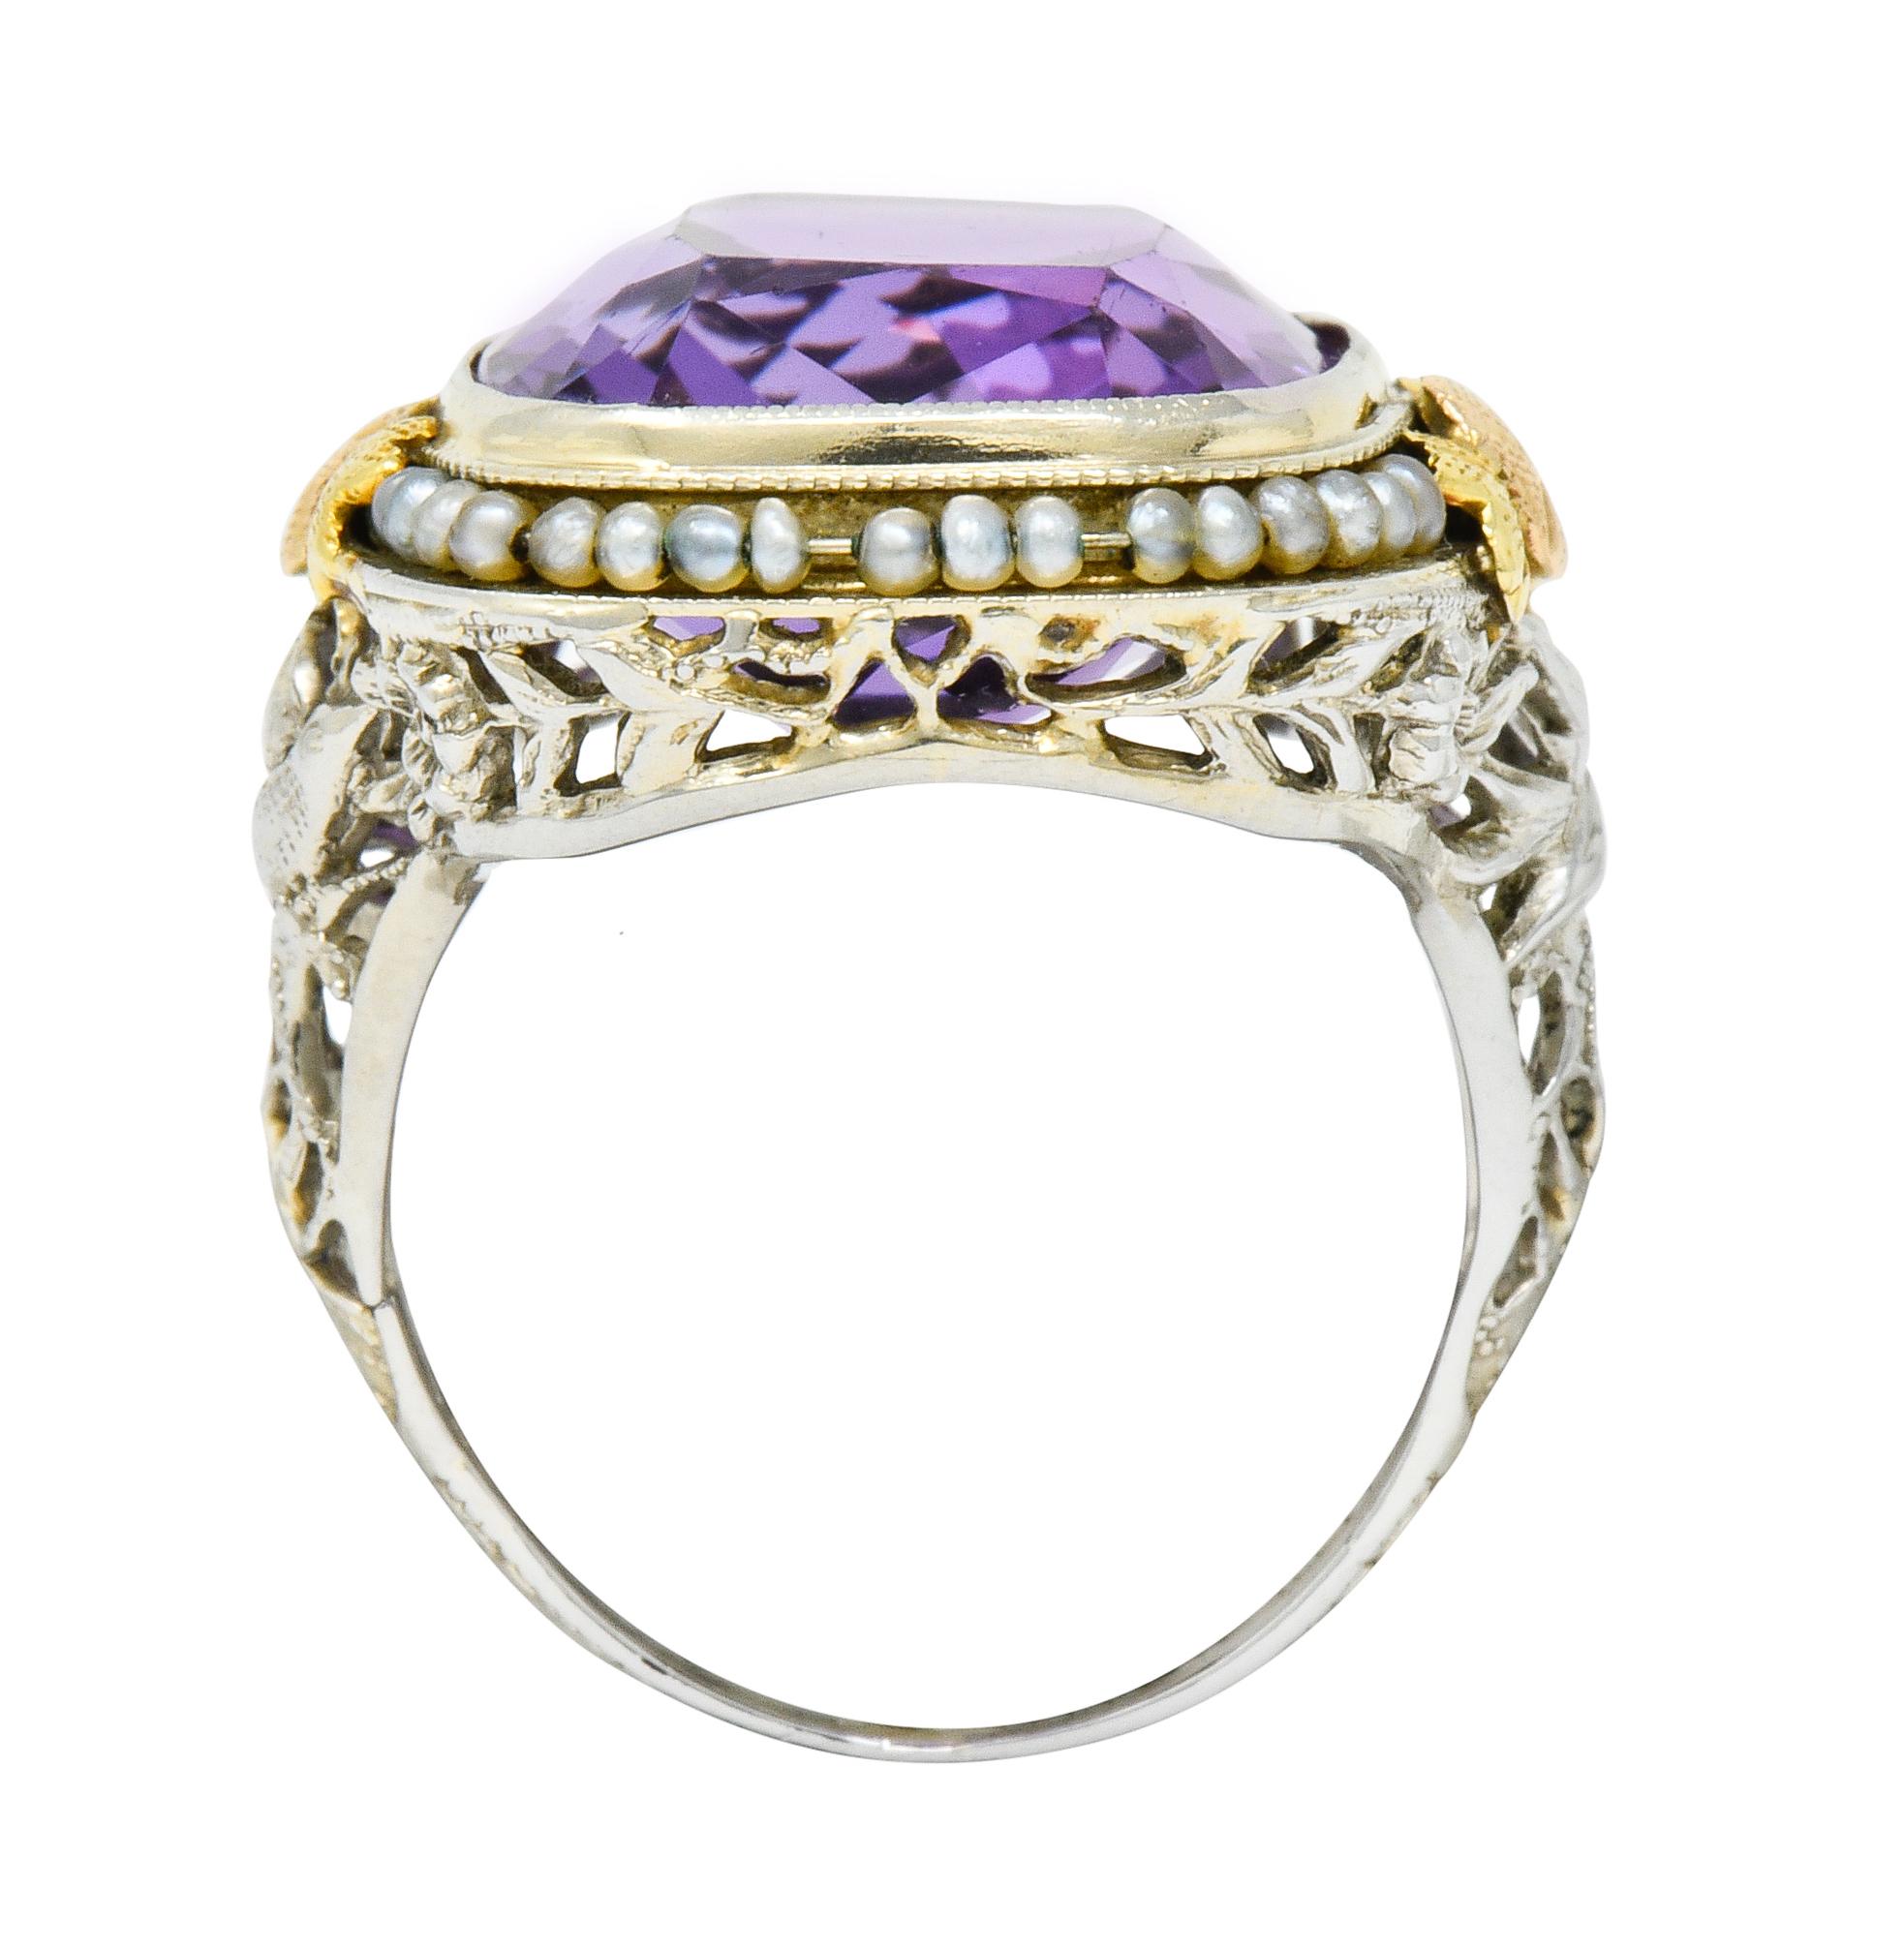 Bassett Jewelry Co. Art Deco 13.34 Carat Amethyst Natural Pearl 18K Gold Ring 1